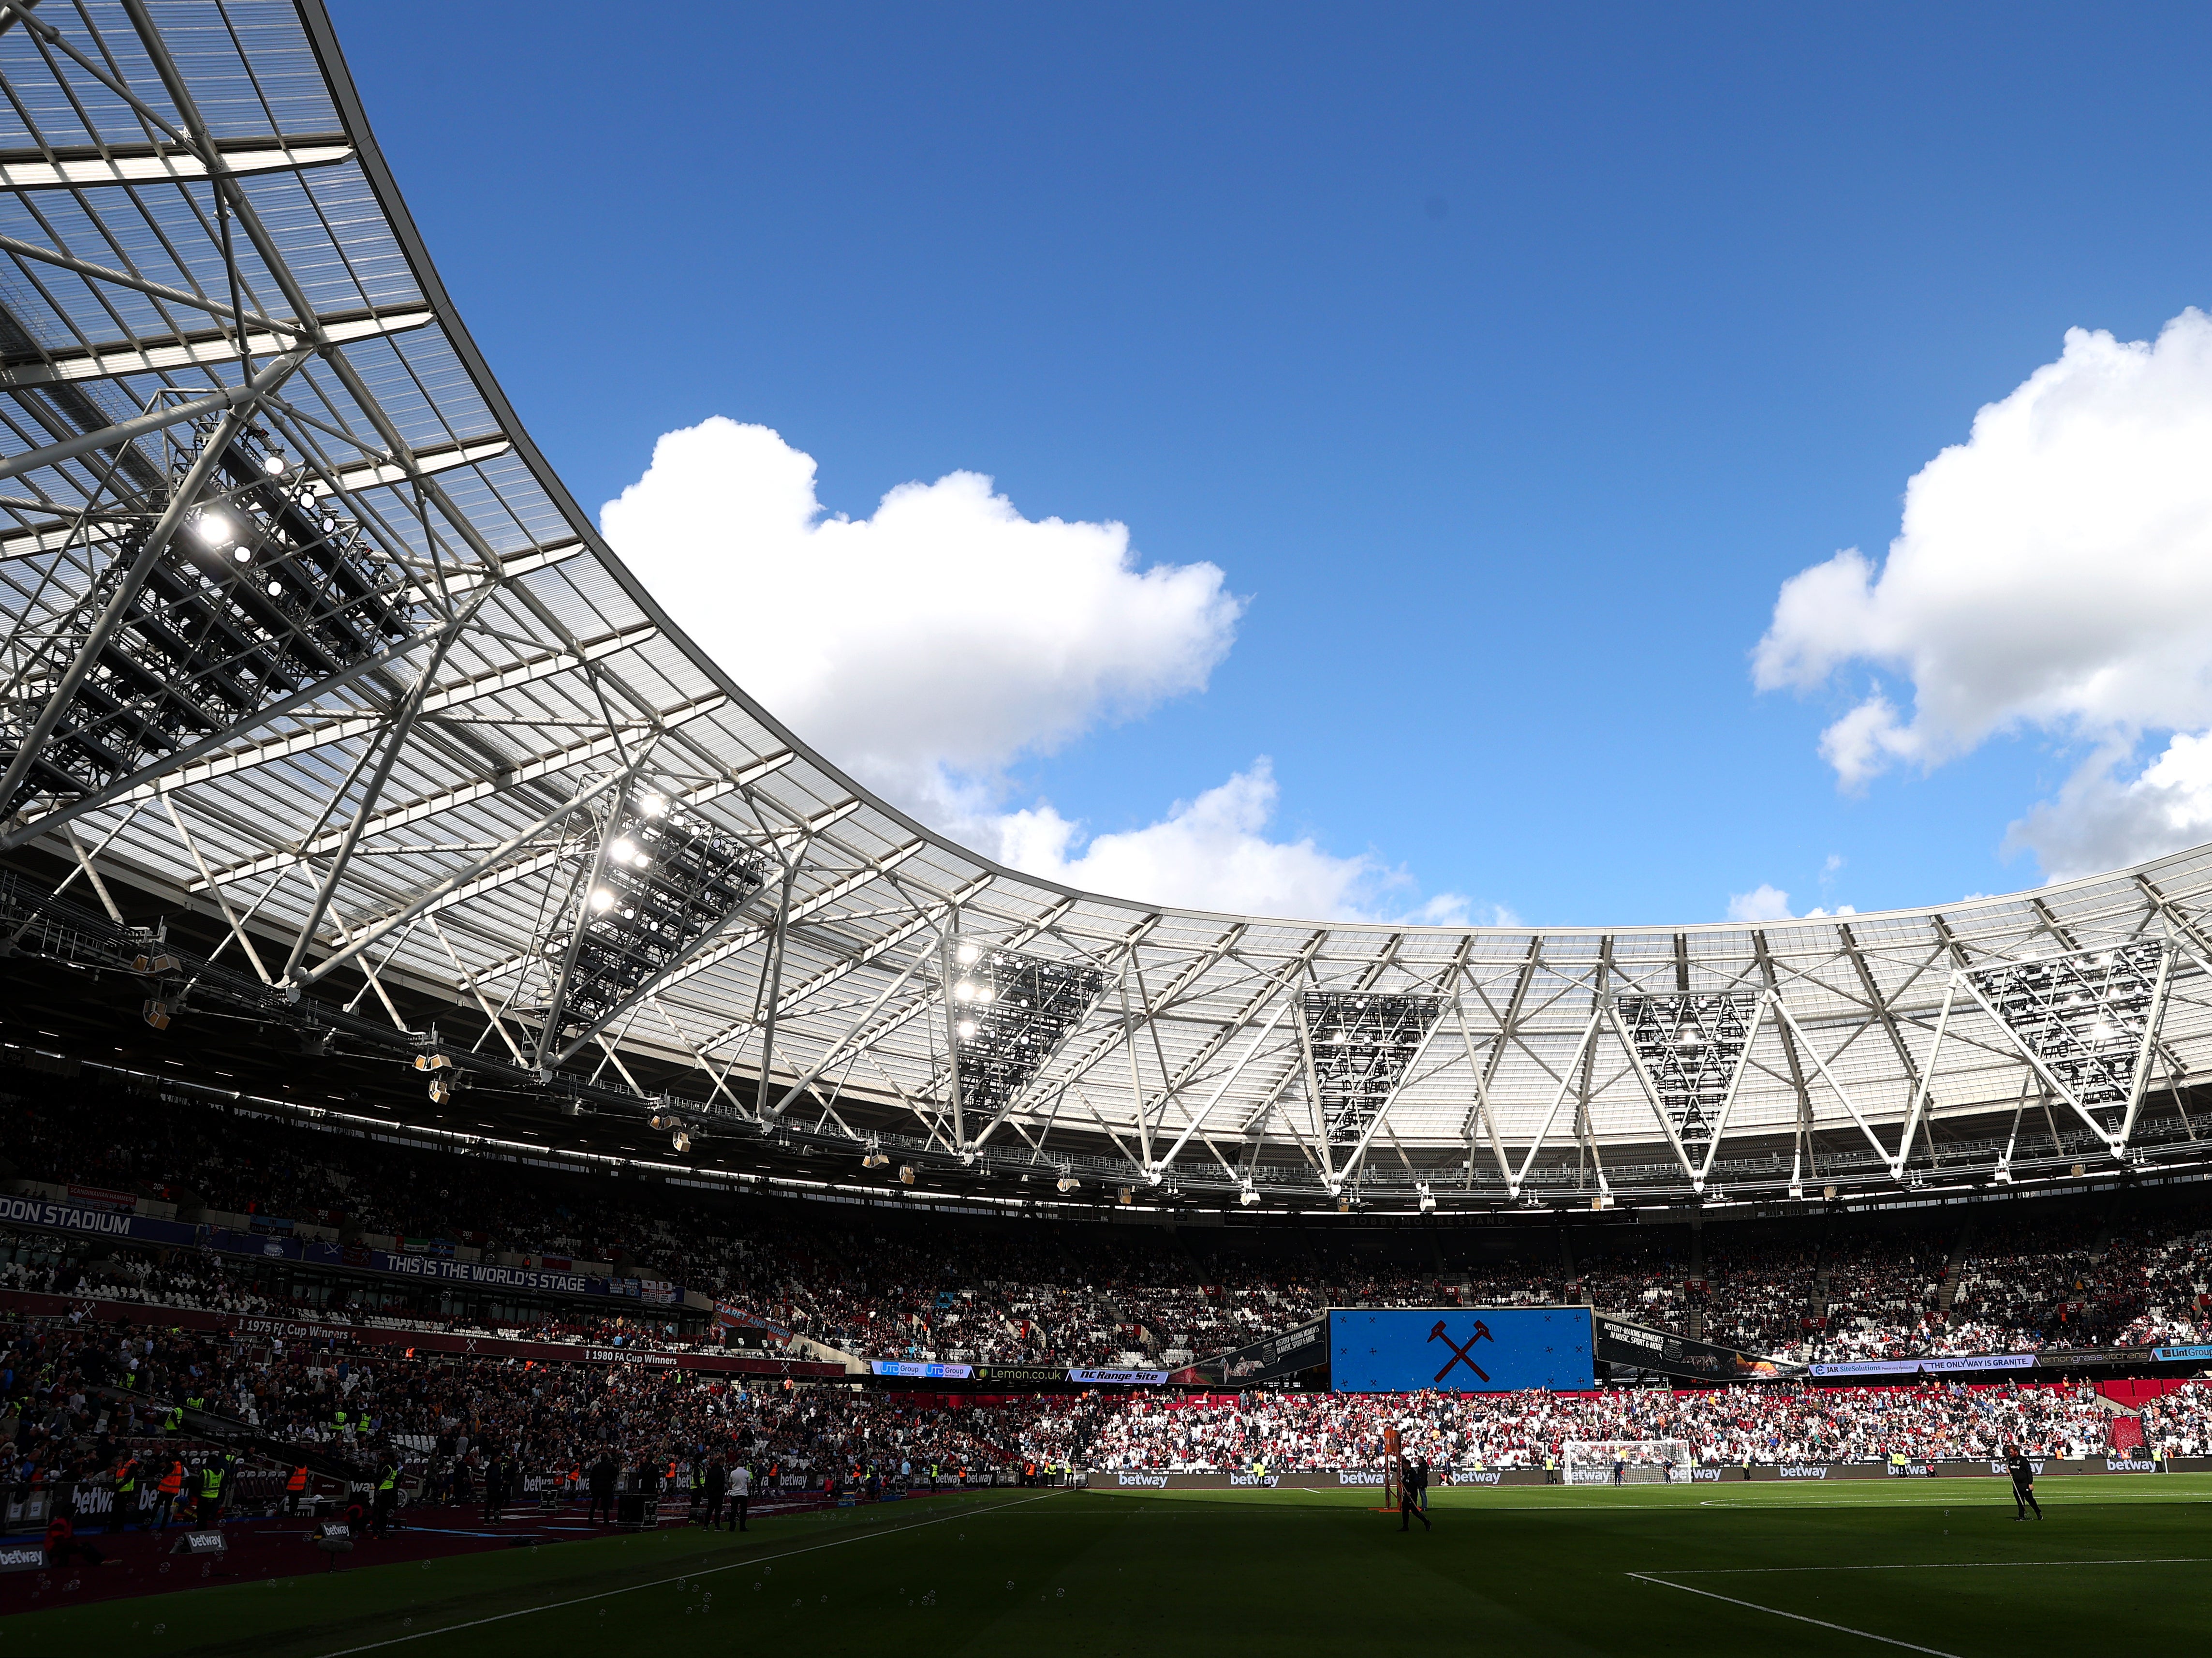 London Stadium, the home of West Ham